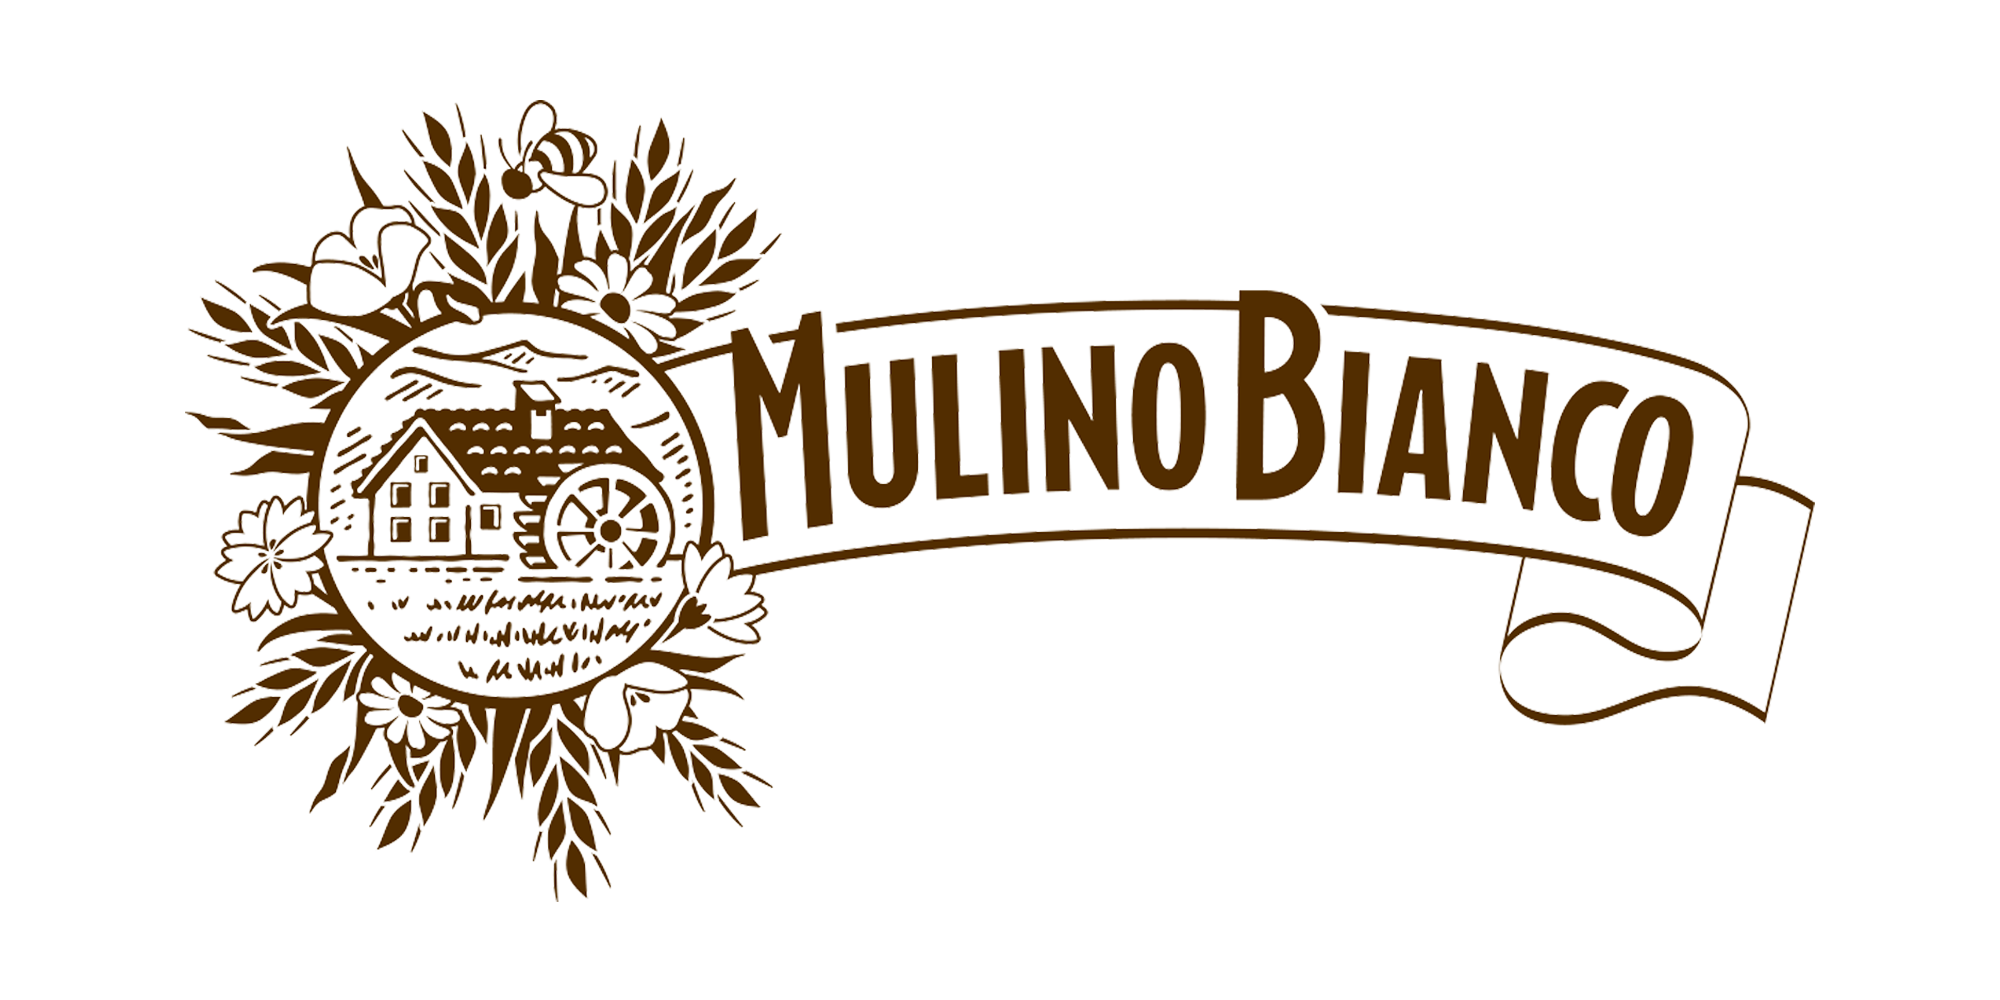 Mulino Bianco Logo